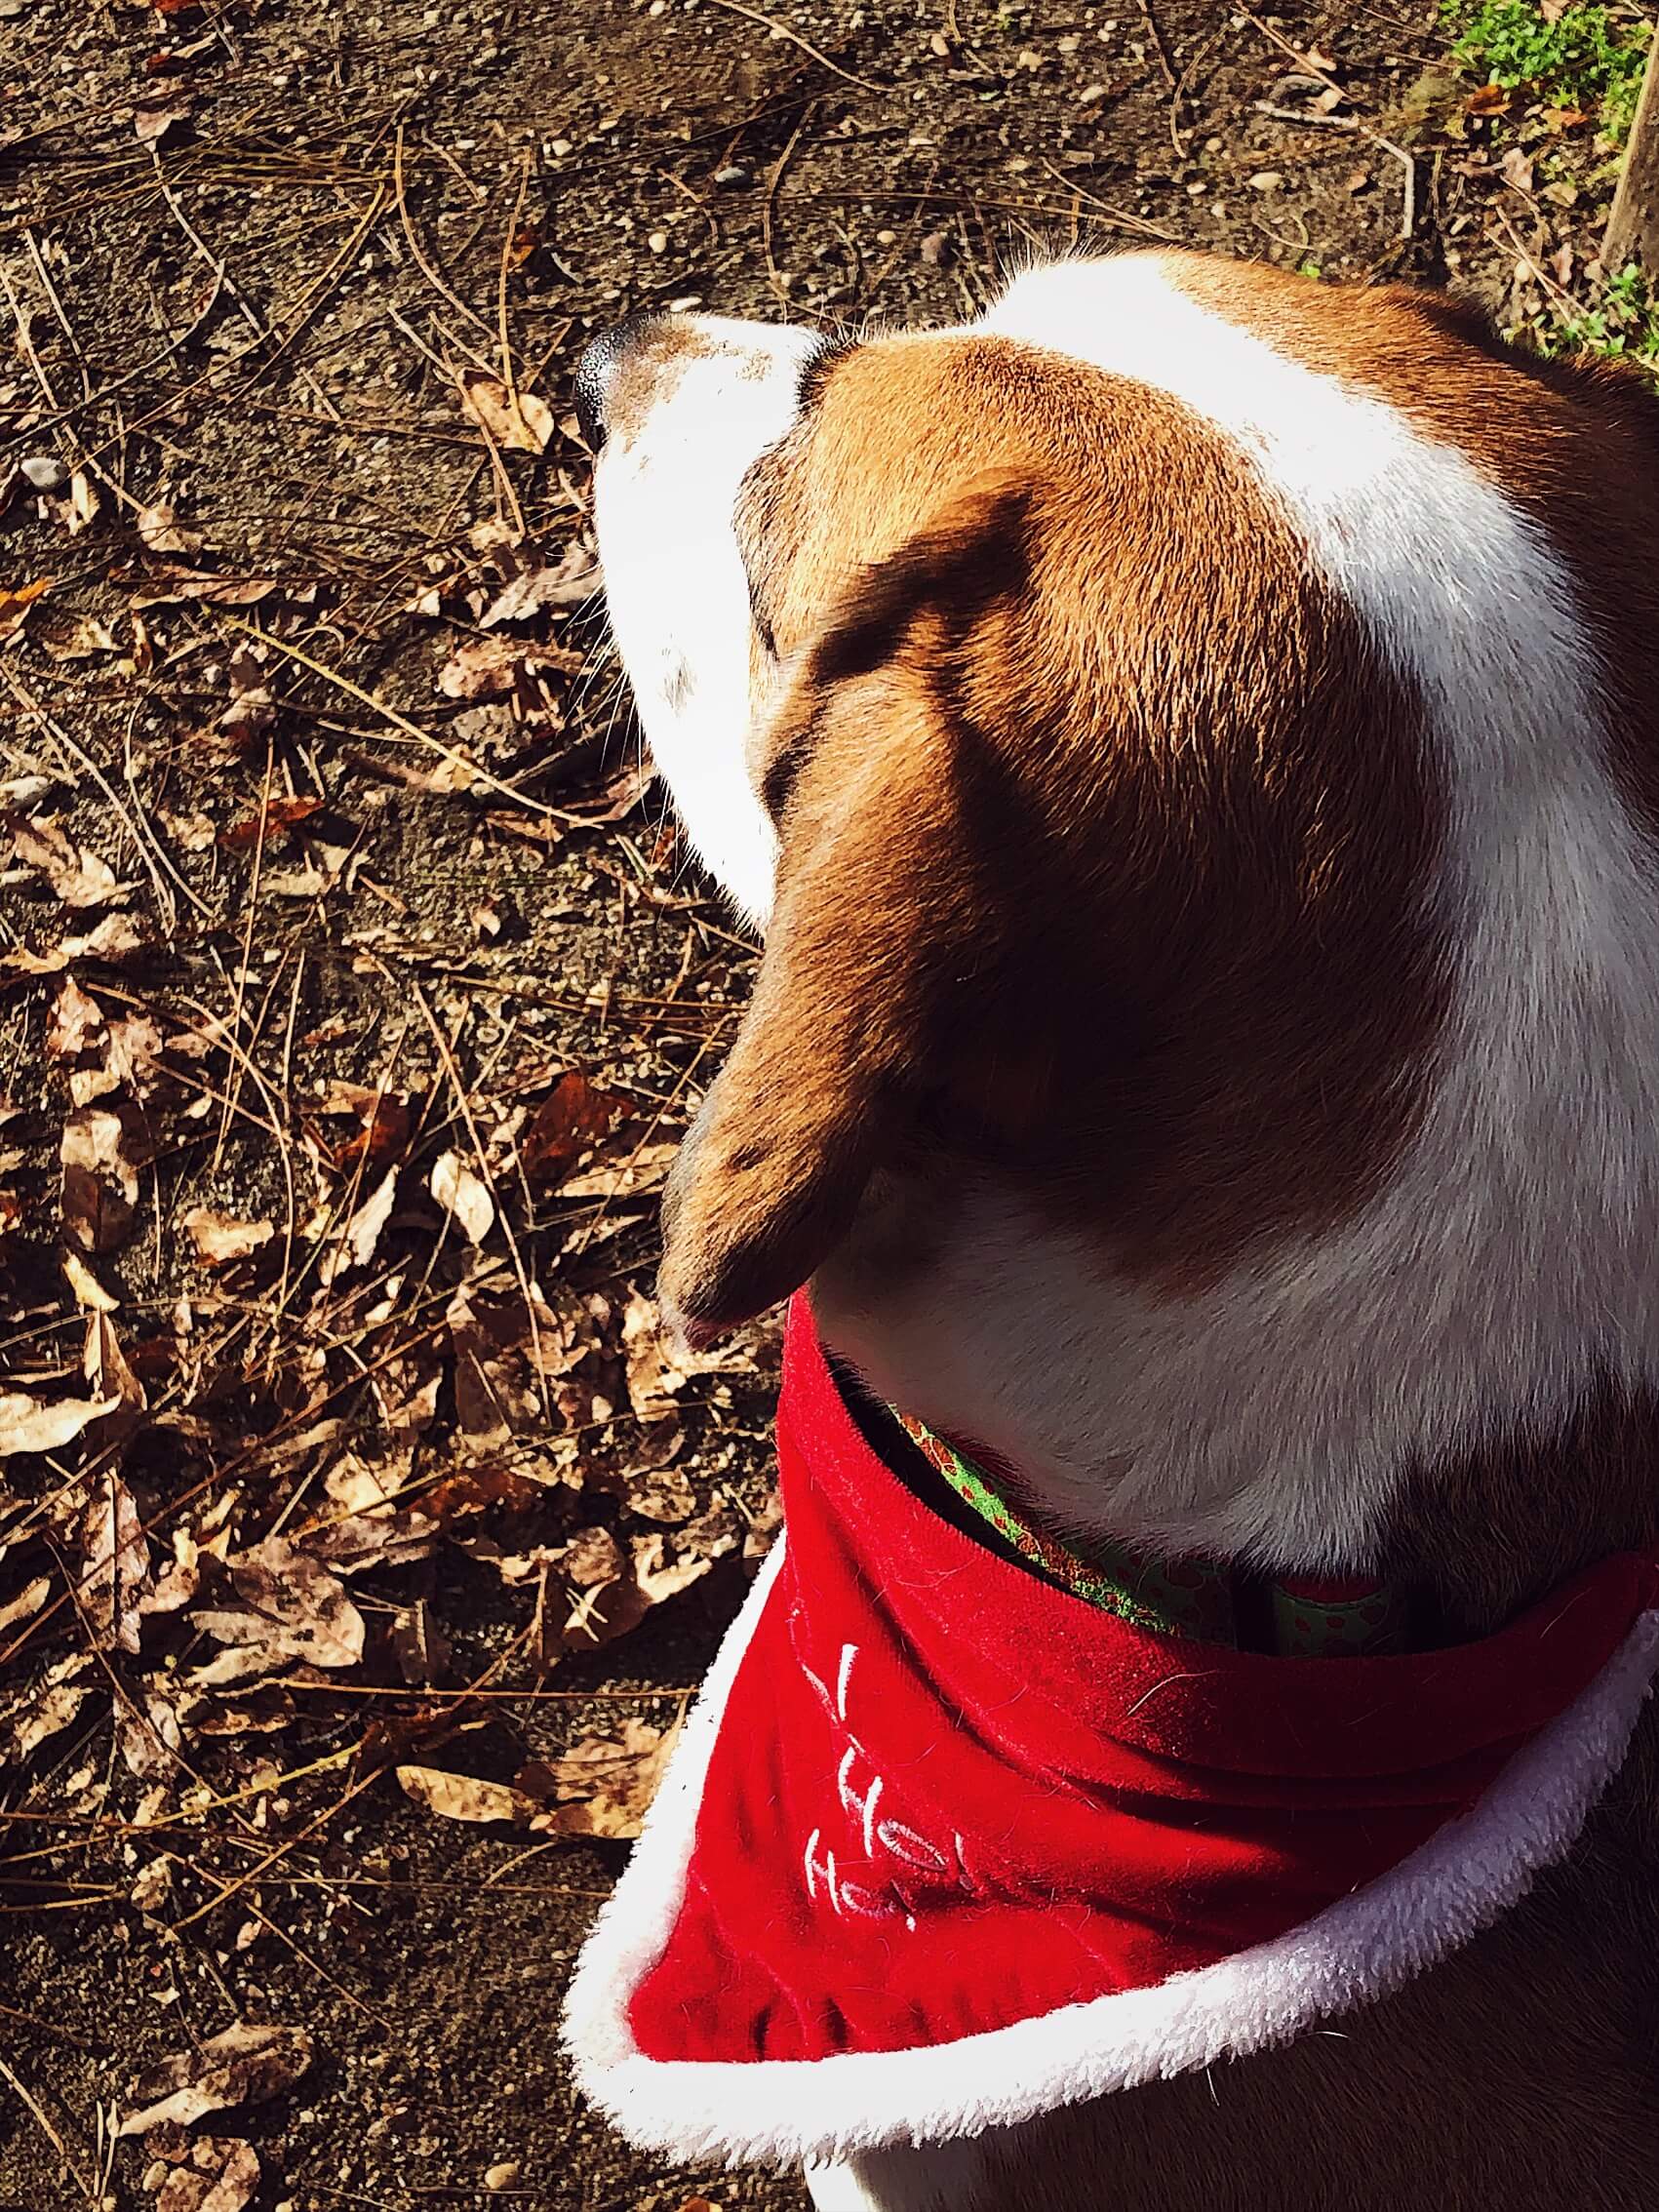 my beagle Smeagol with his Christmas bandana